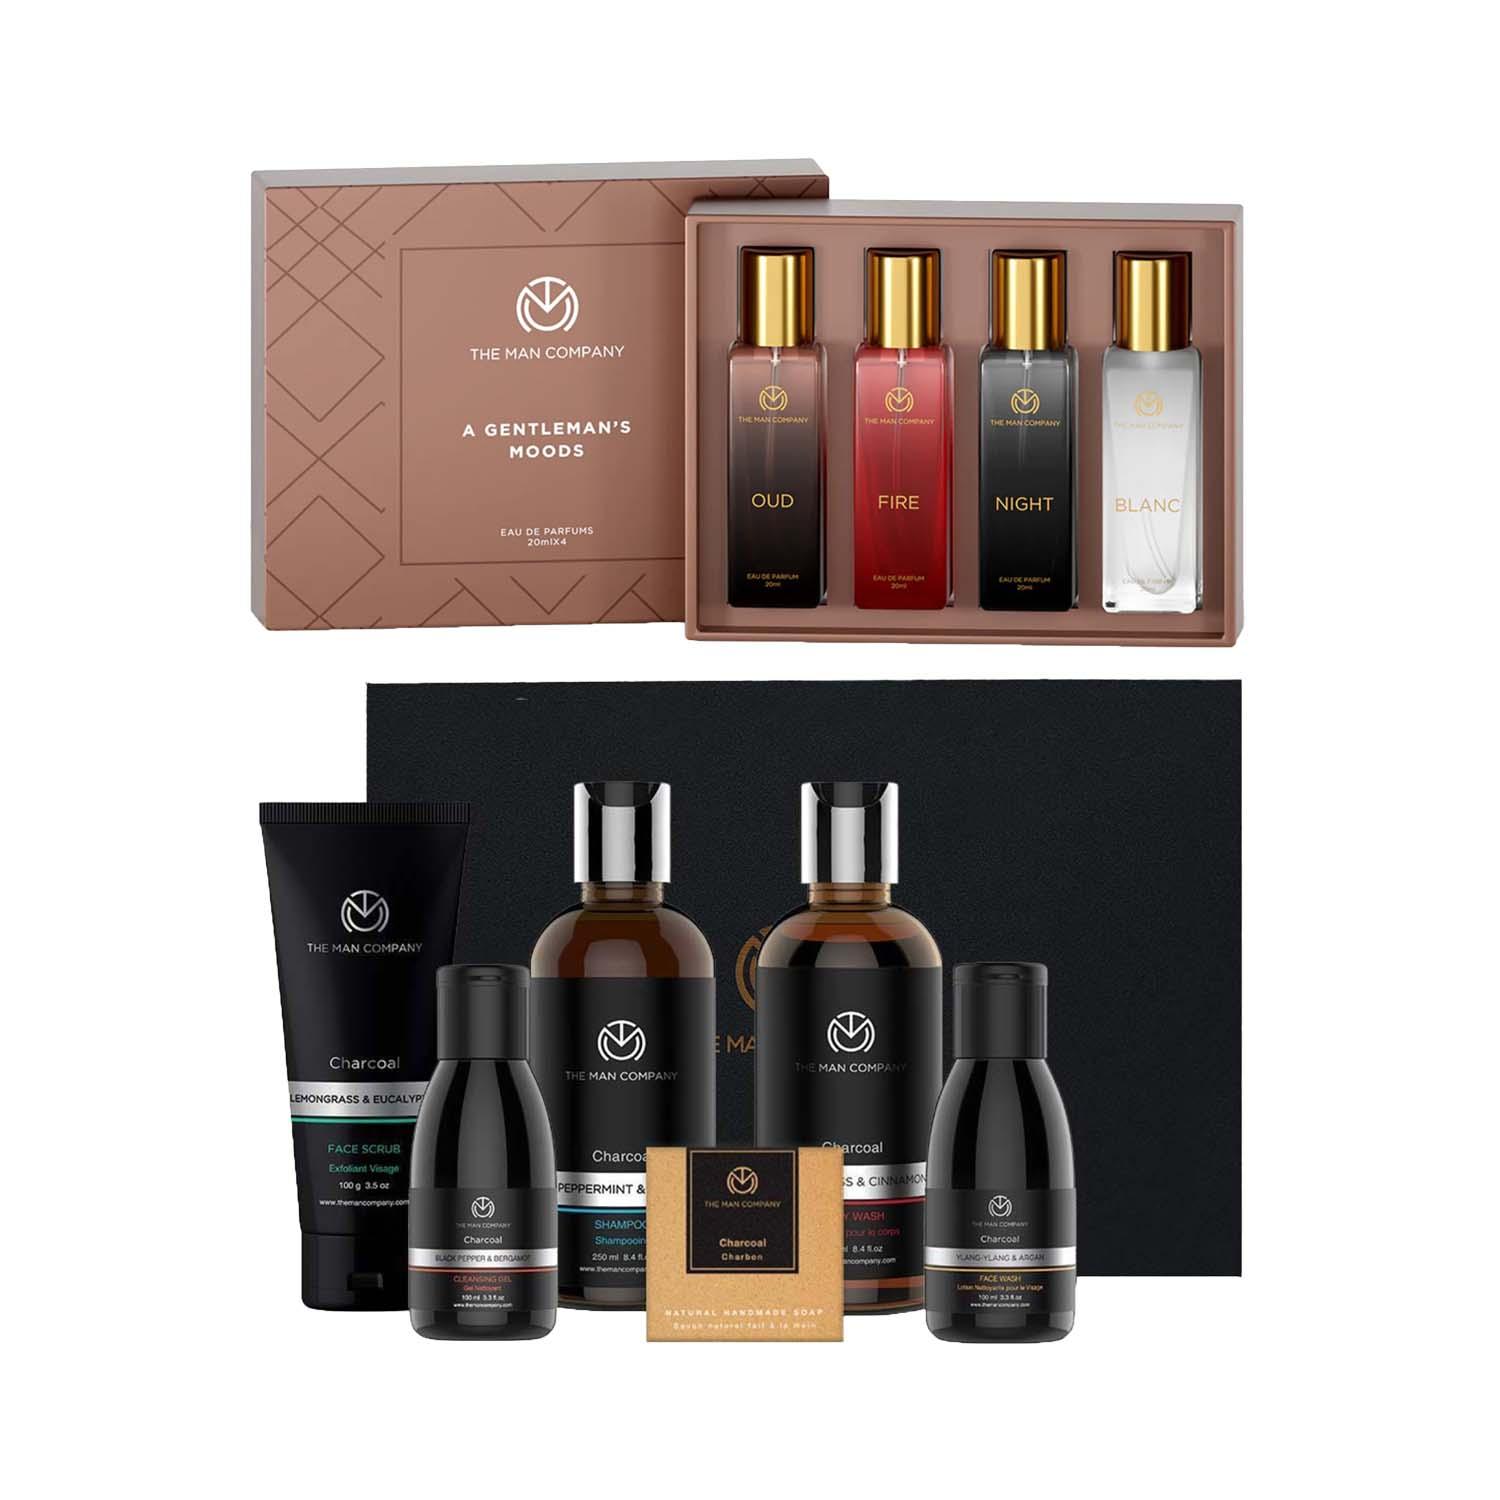 The Man Company | The Man Company Moods Premium Fragrance Gift Set (4 pcs) & Charcoal Grooming Kit (6 pcs) Combo